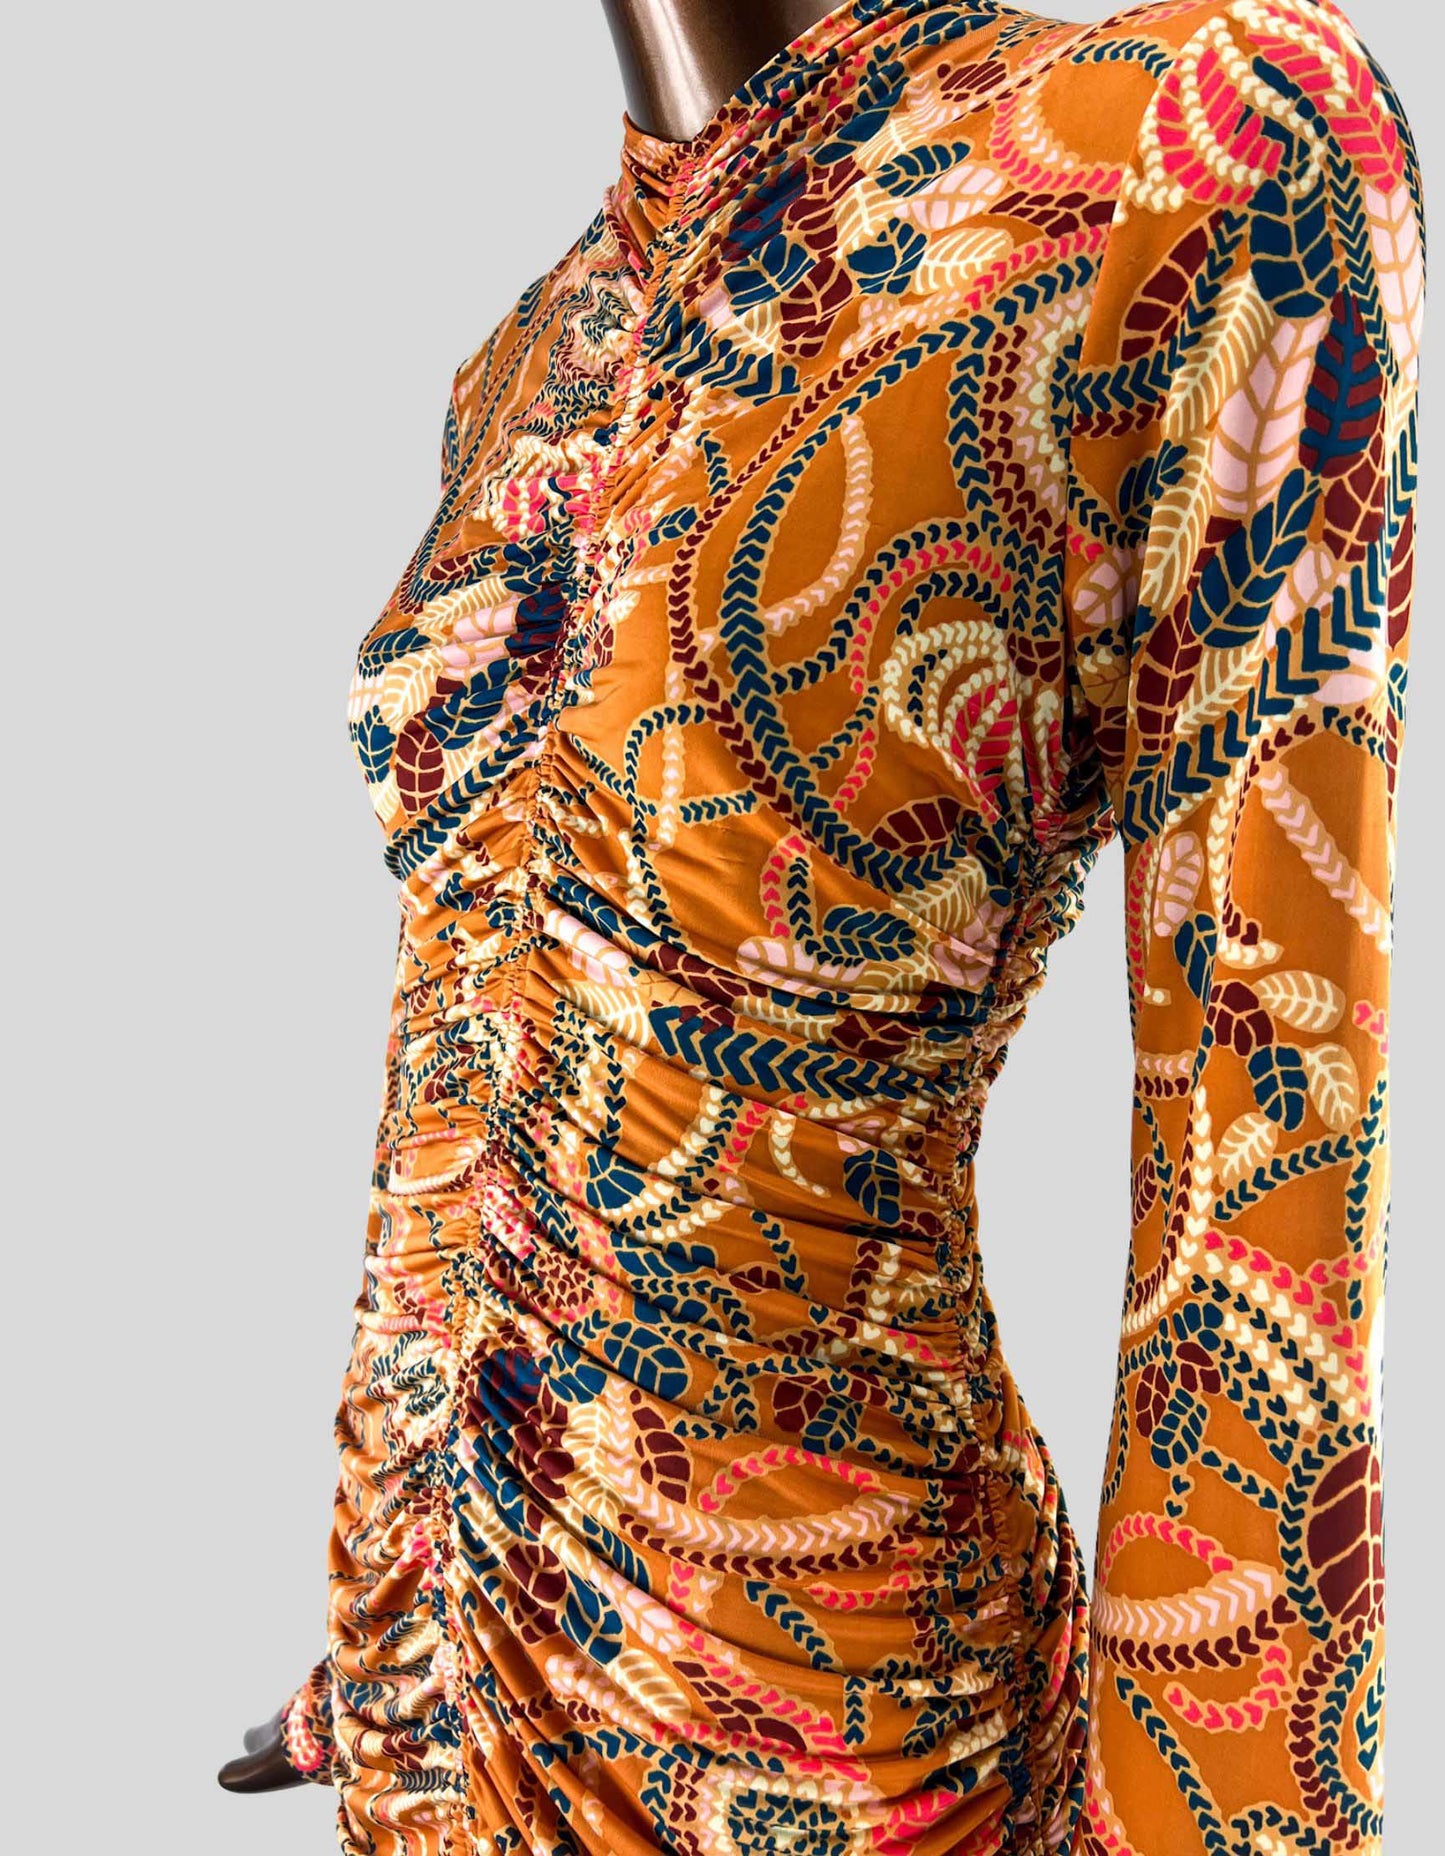 A.L.C. Printed Midi Length Dress - Large